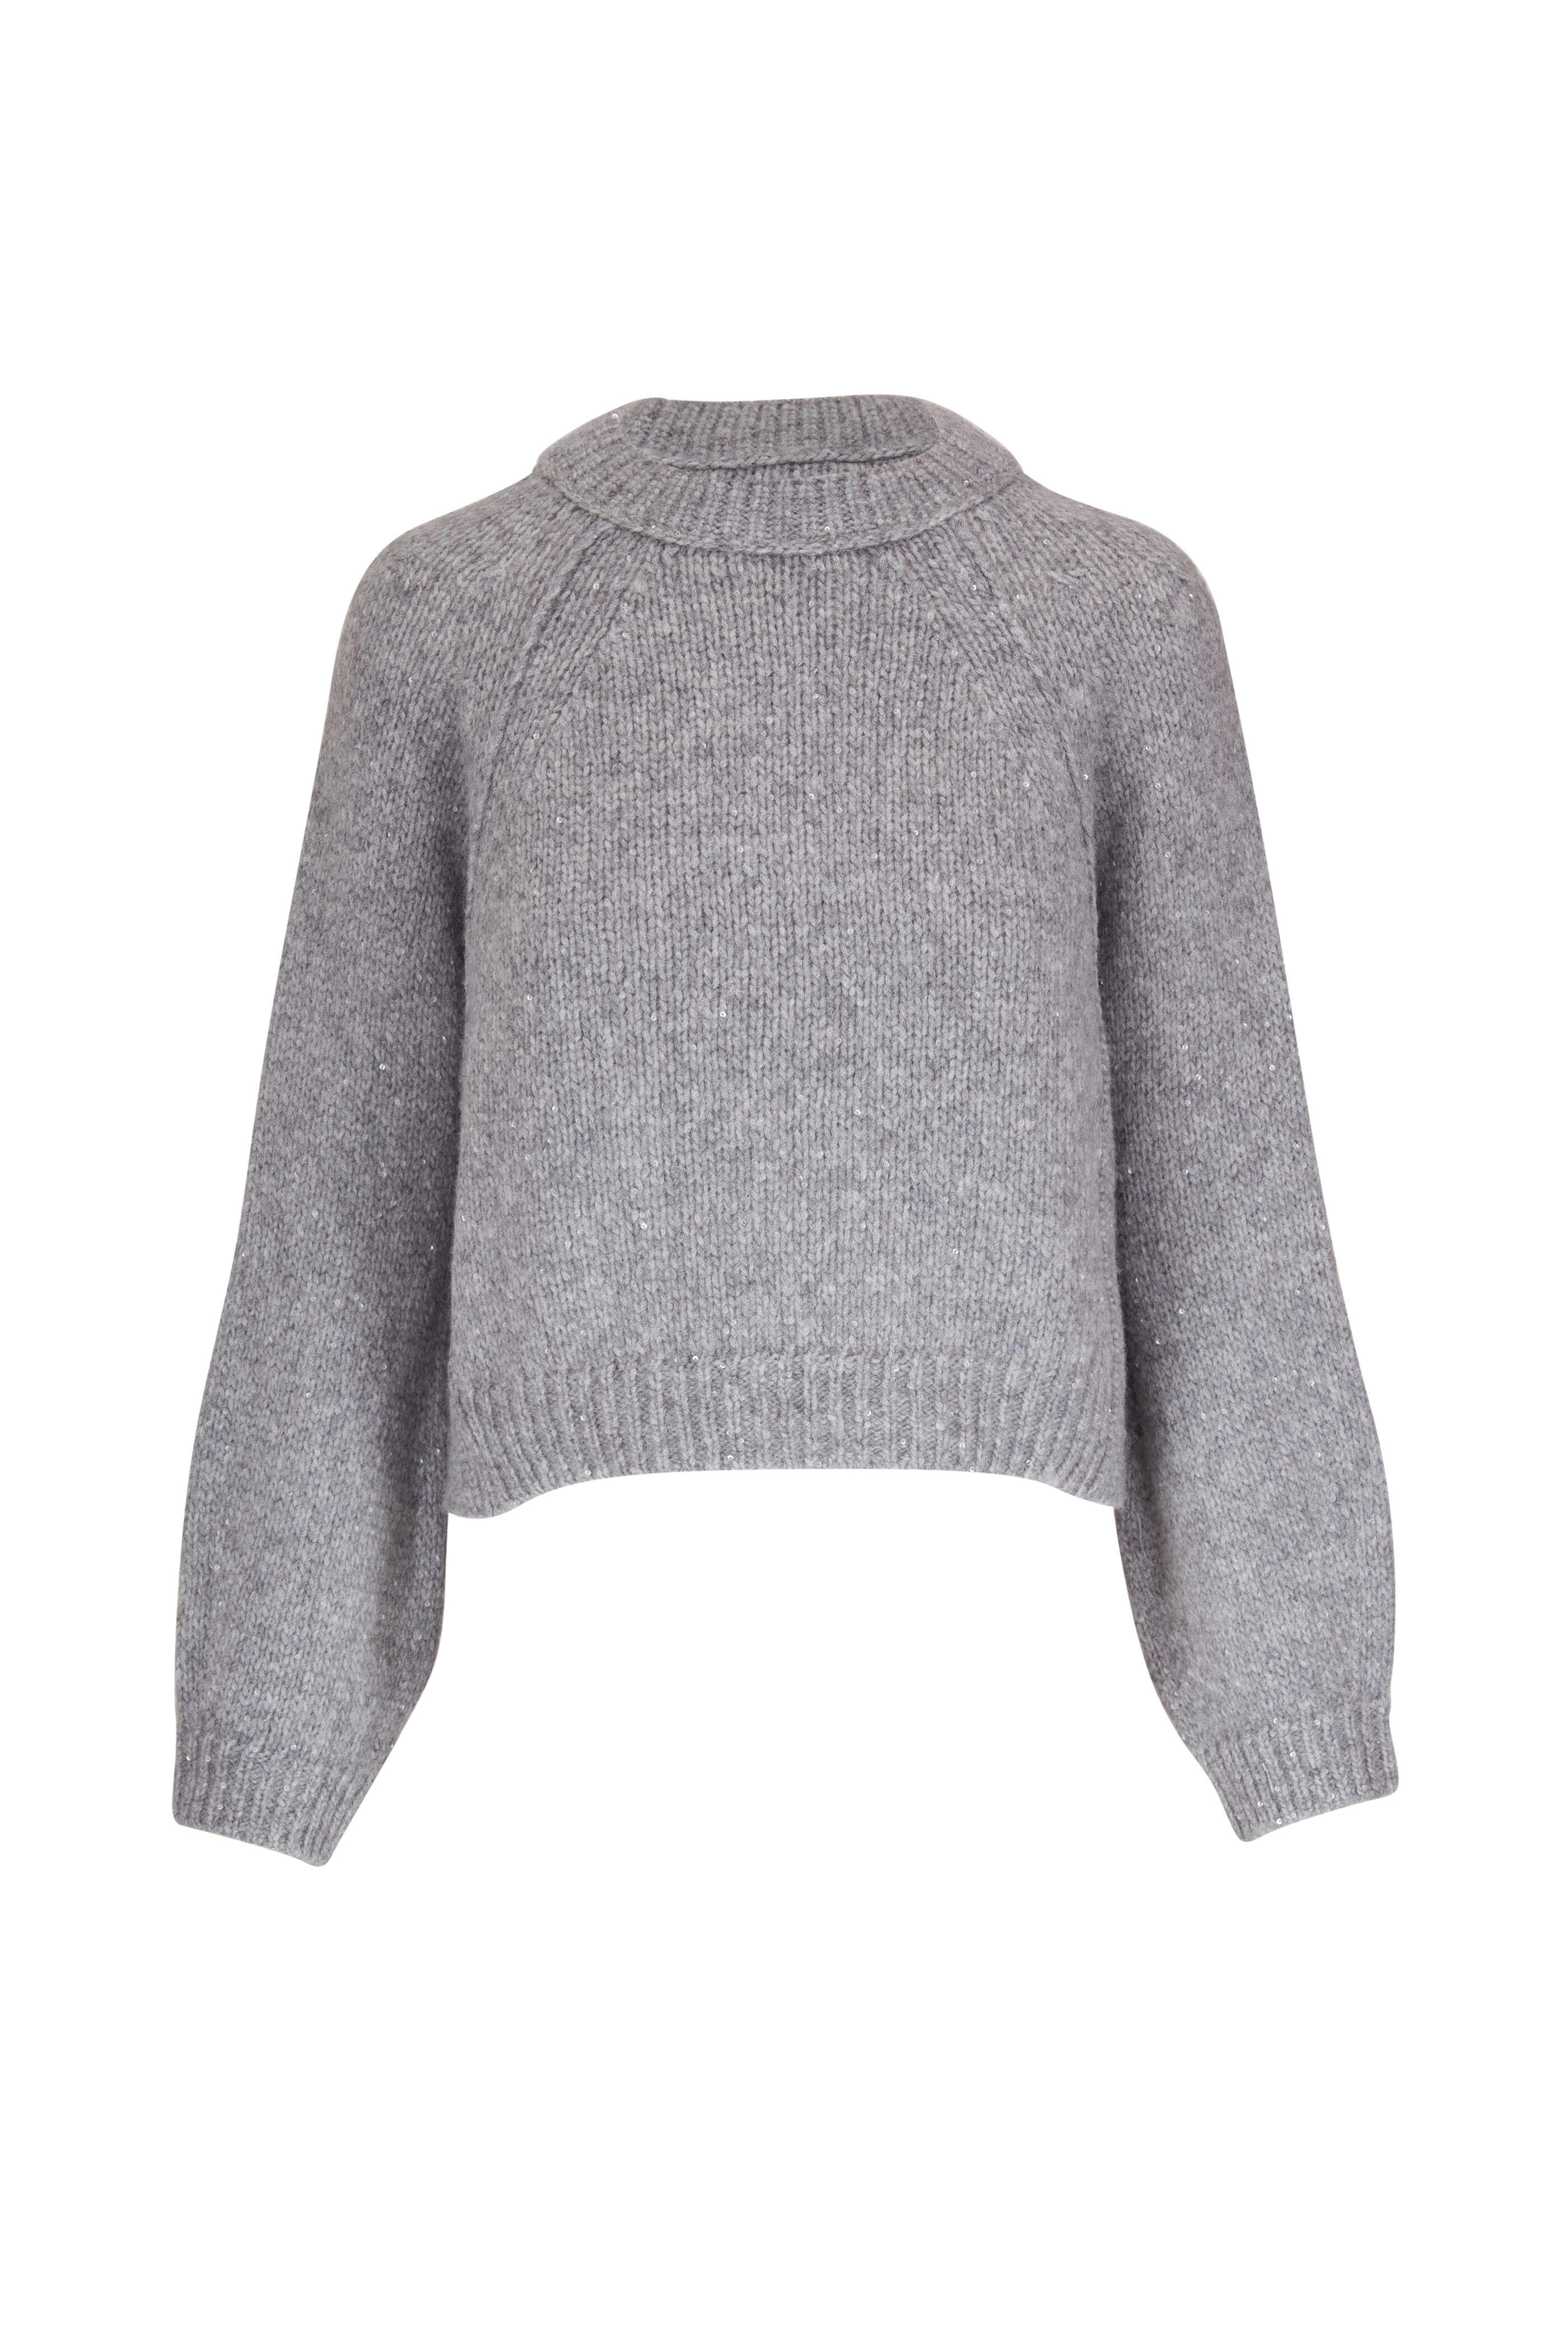 Dorothee Schumacher - Sparkling Softness Gray Pullover Sweater